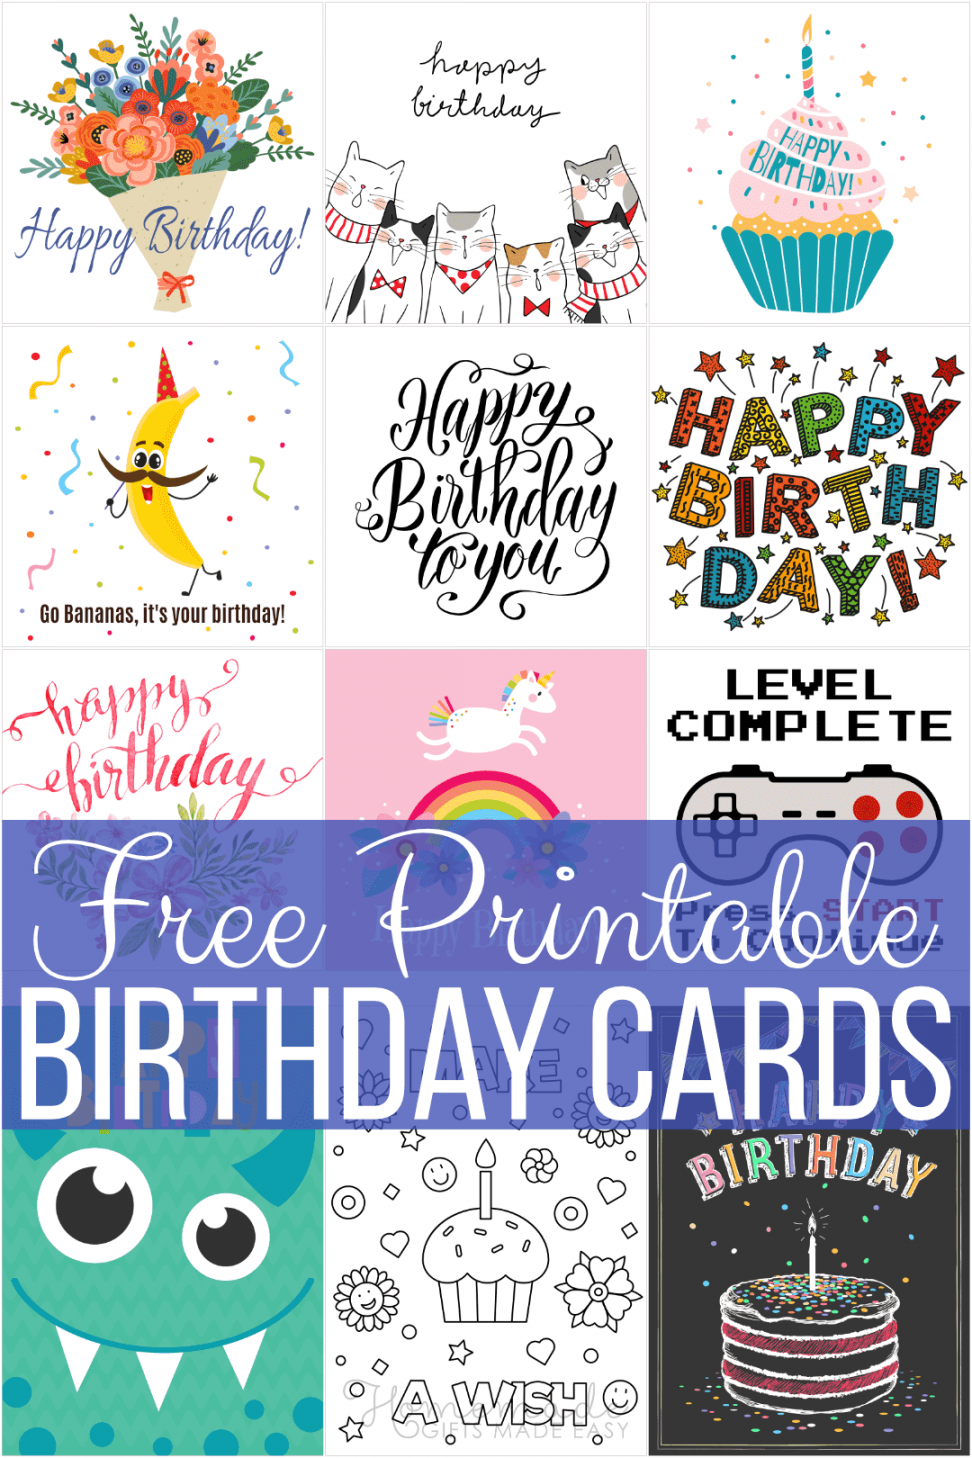 Free Printable Greeting Cards - Printable - Free Printable Birthday Cards for Everyone